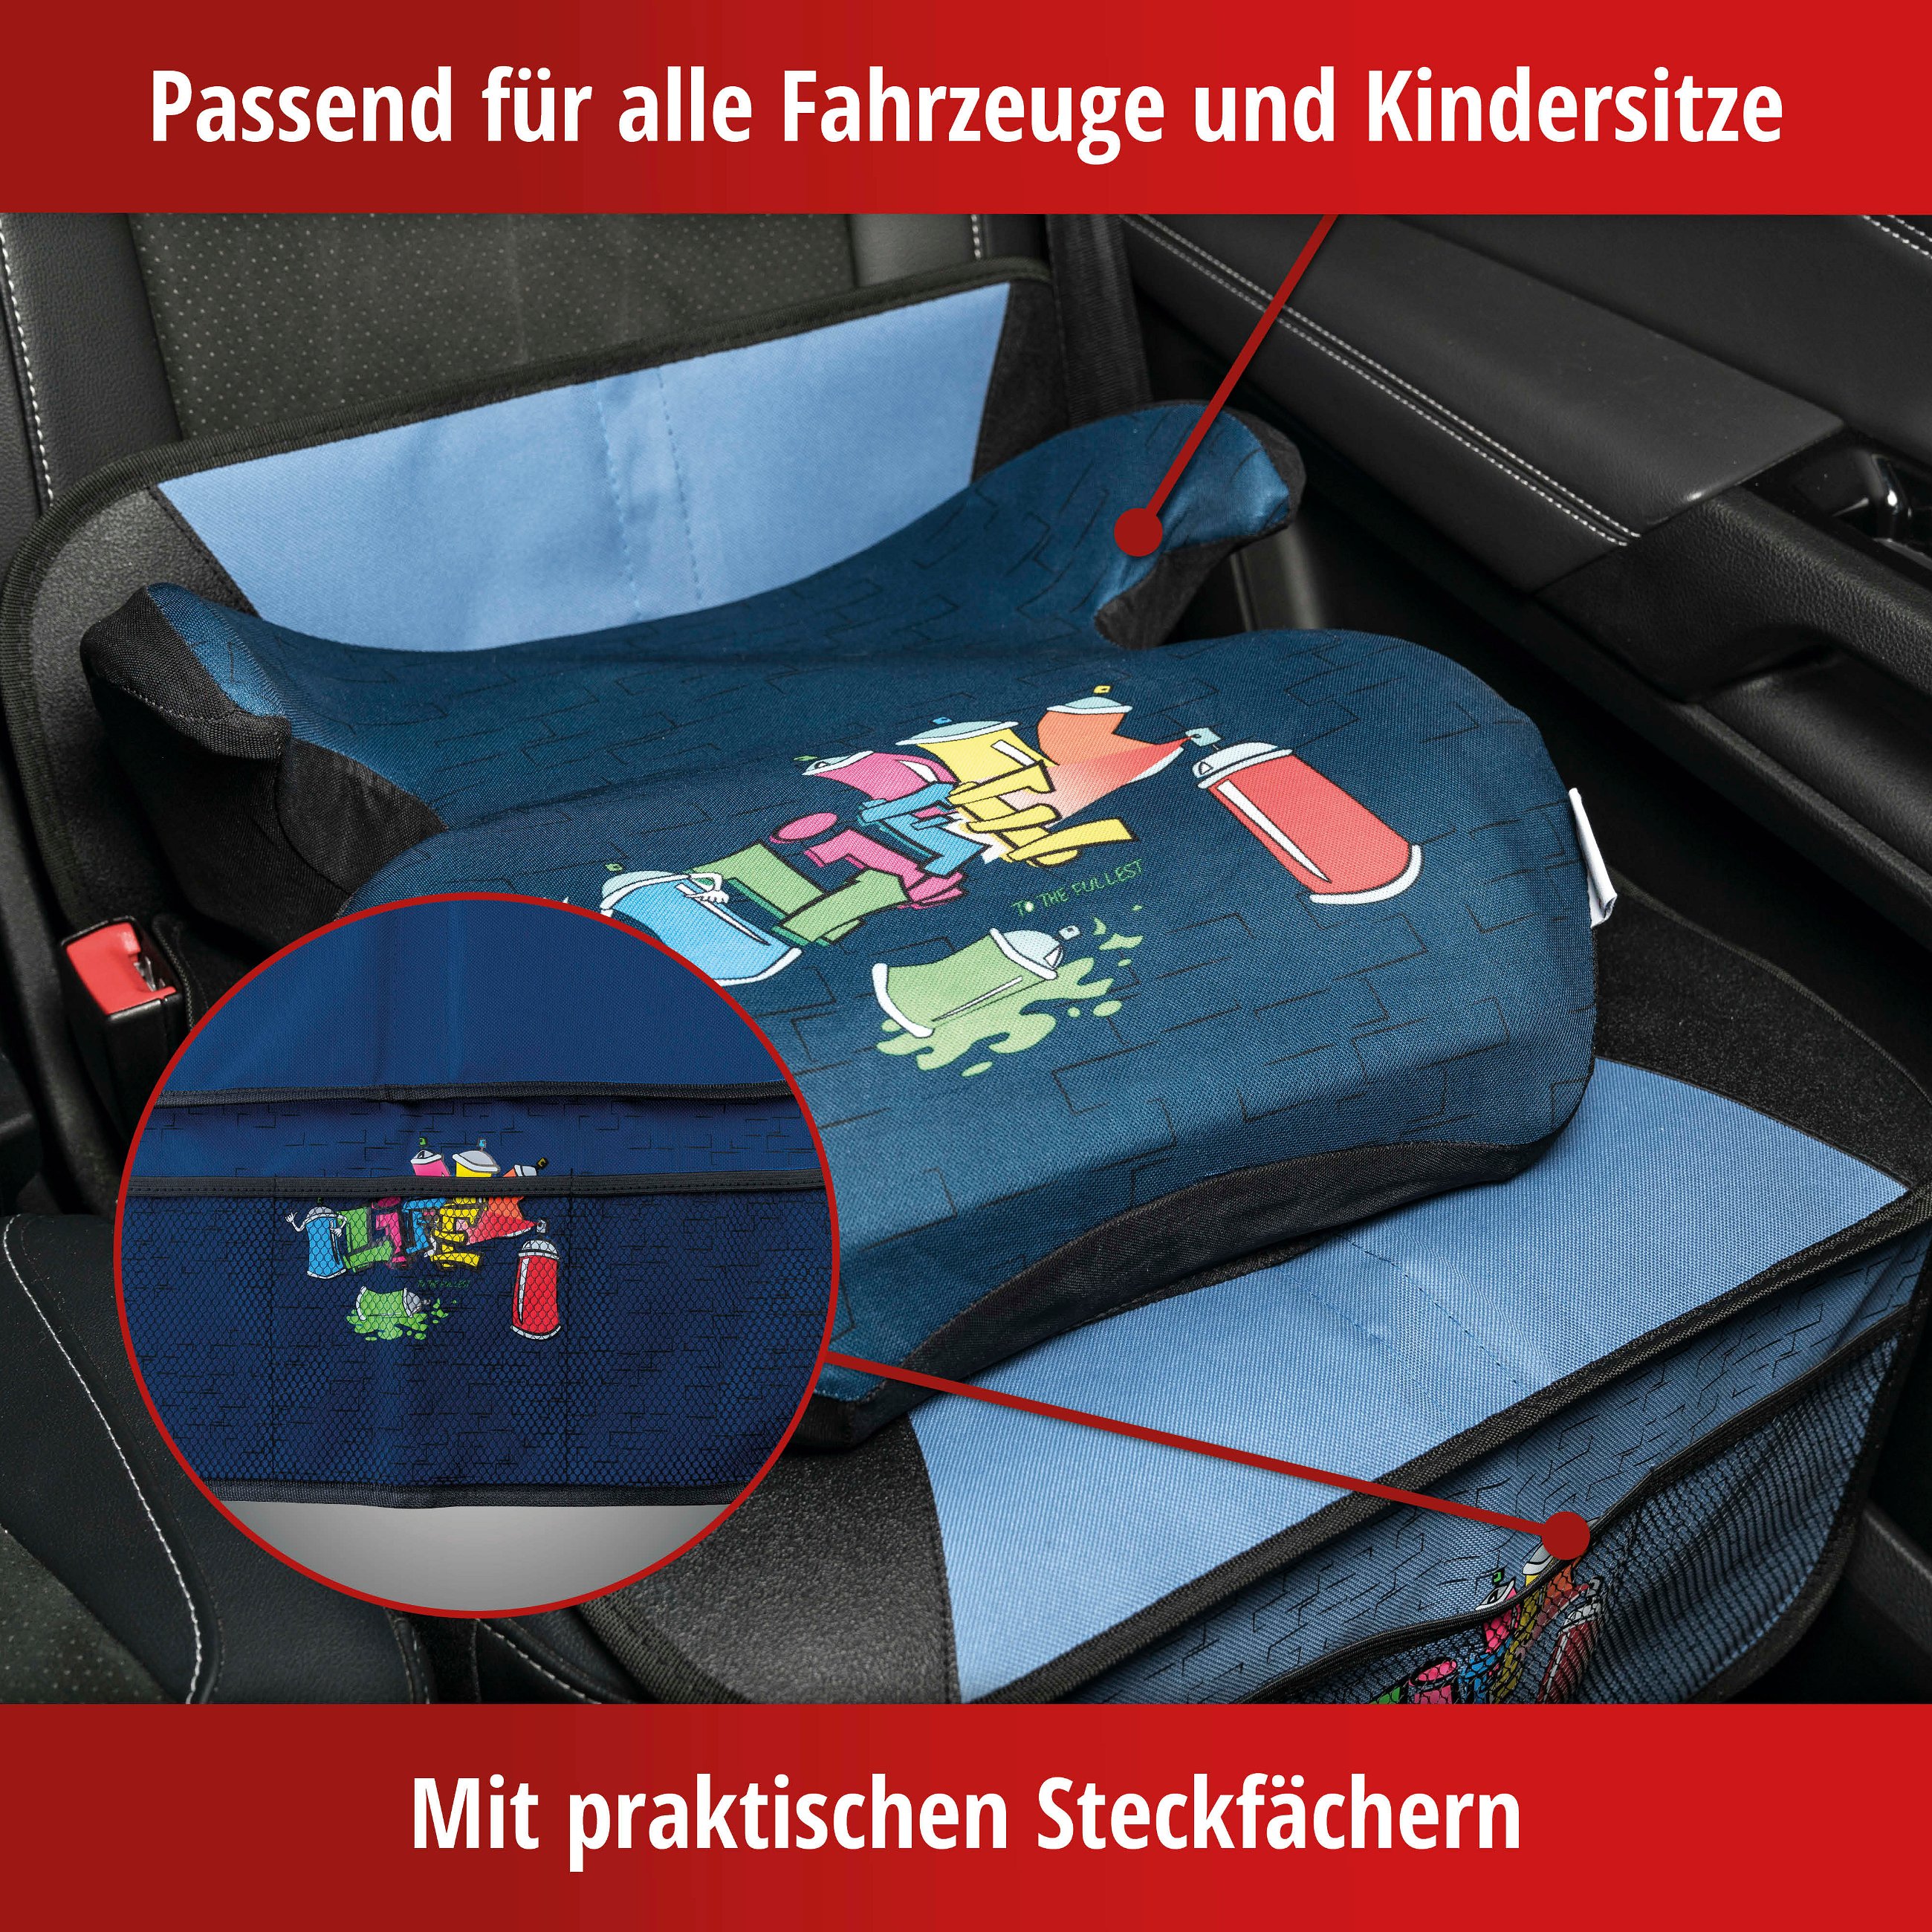 Kindersitzunterlage Graffiti, Auto-Schutzunterlage, Sitzschoner Kindersitz blau